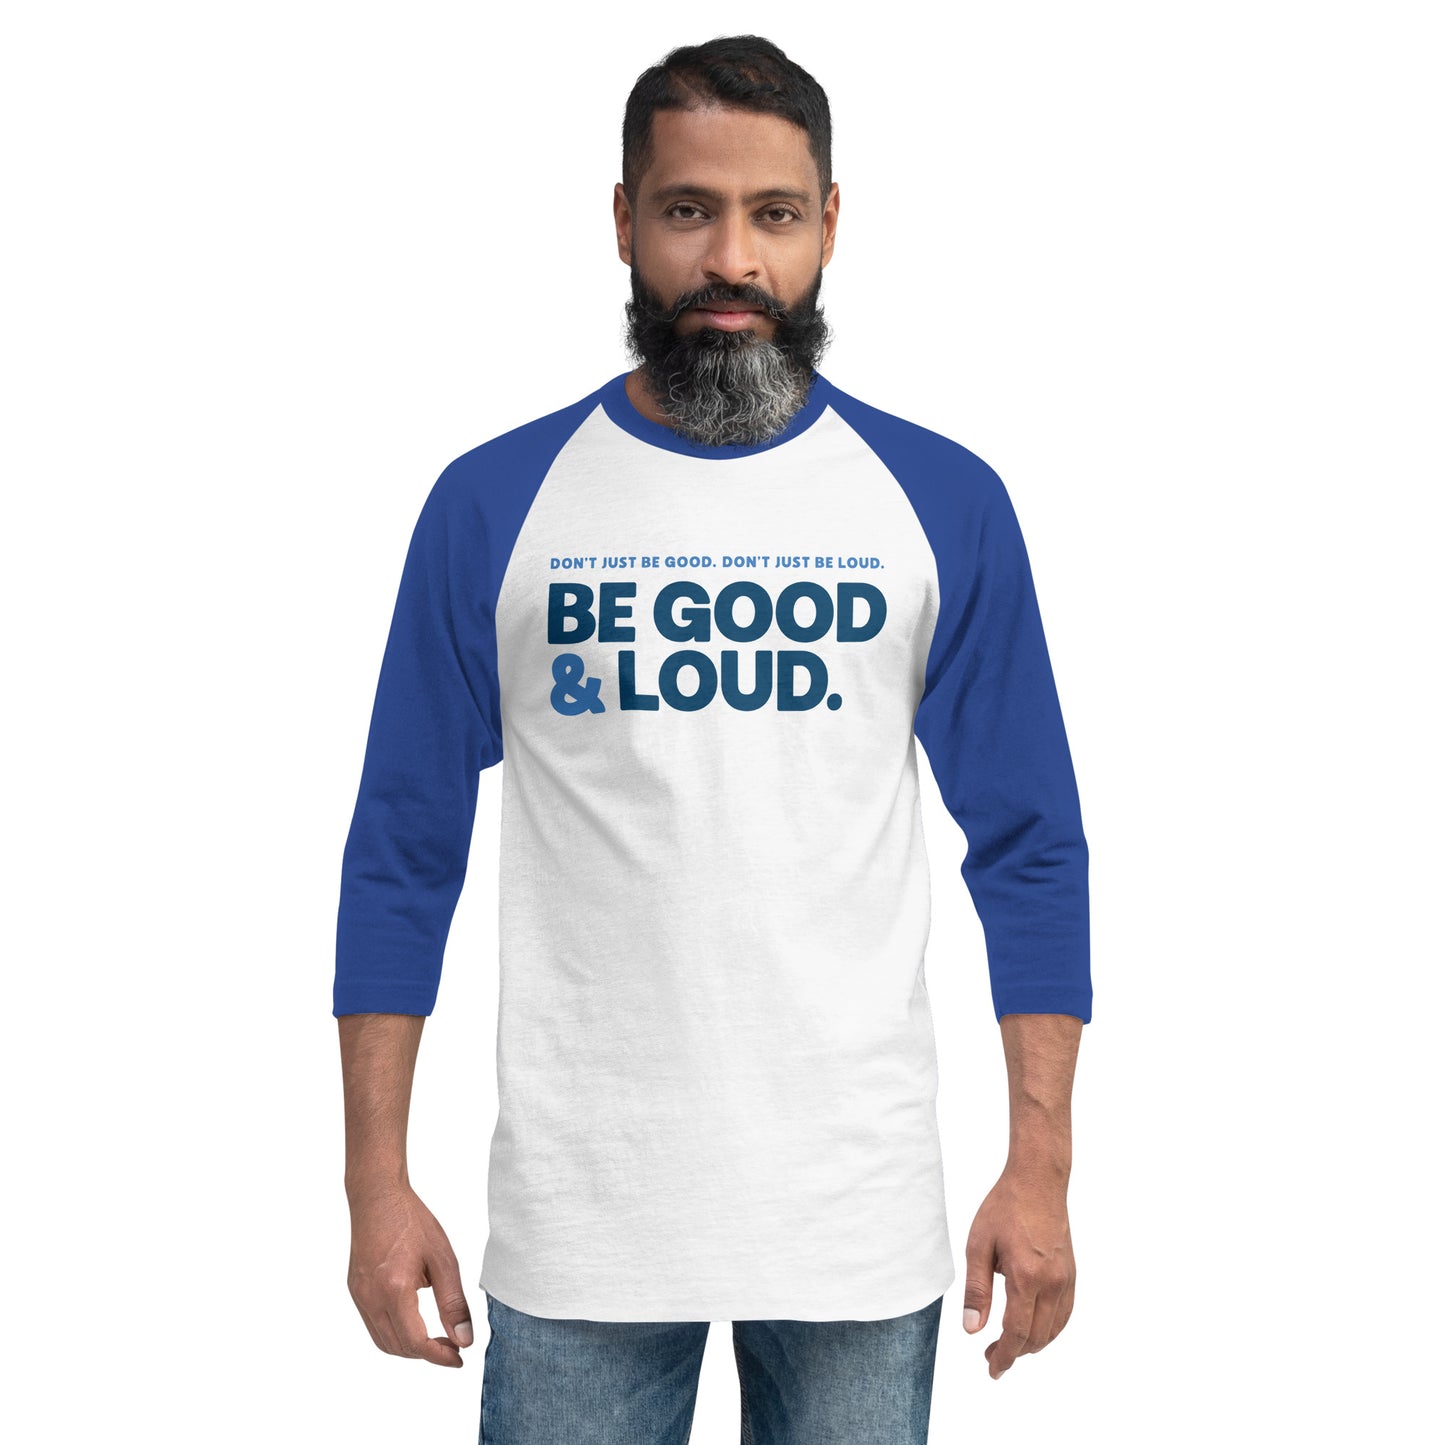 Be Good and Loud - 3/4 Sleeve Shirt